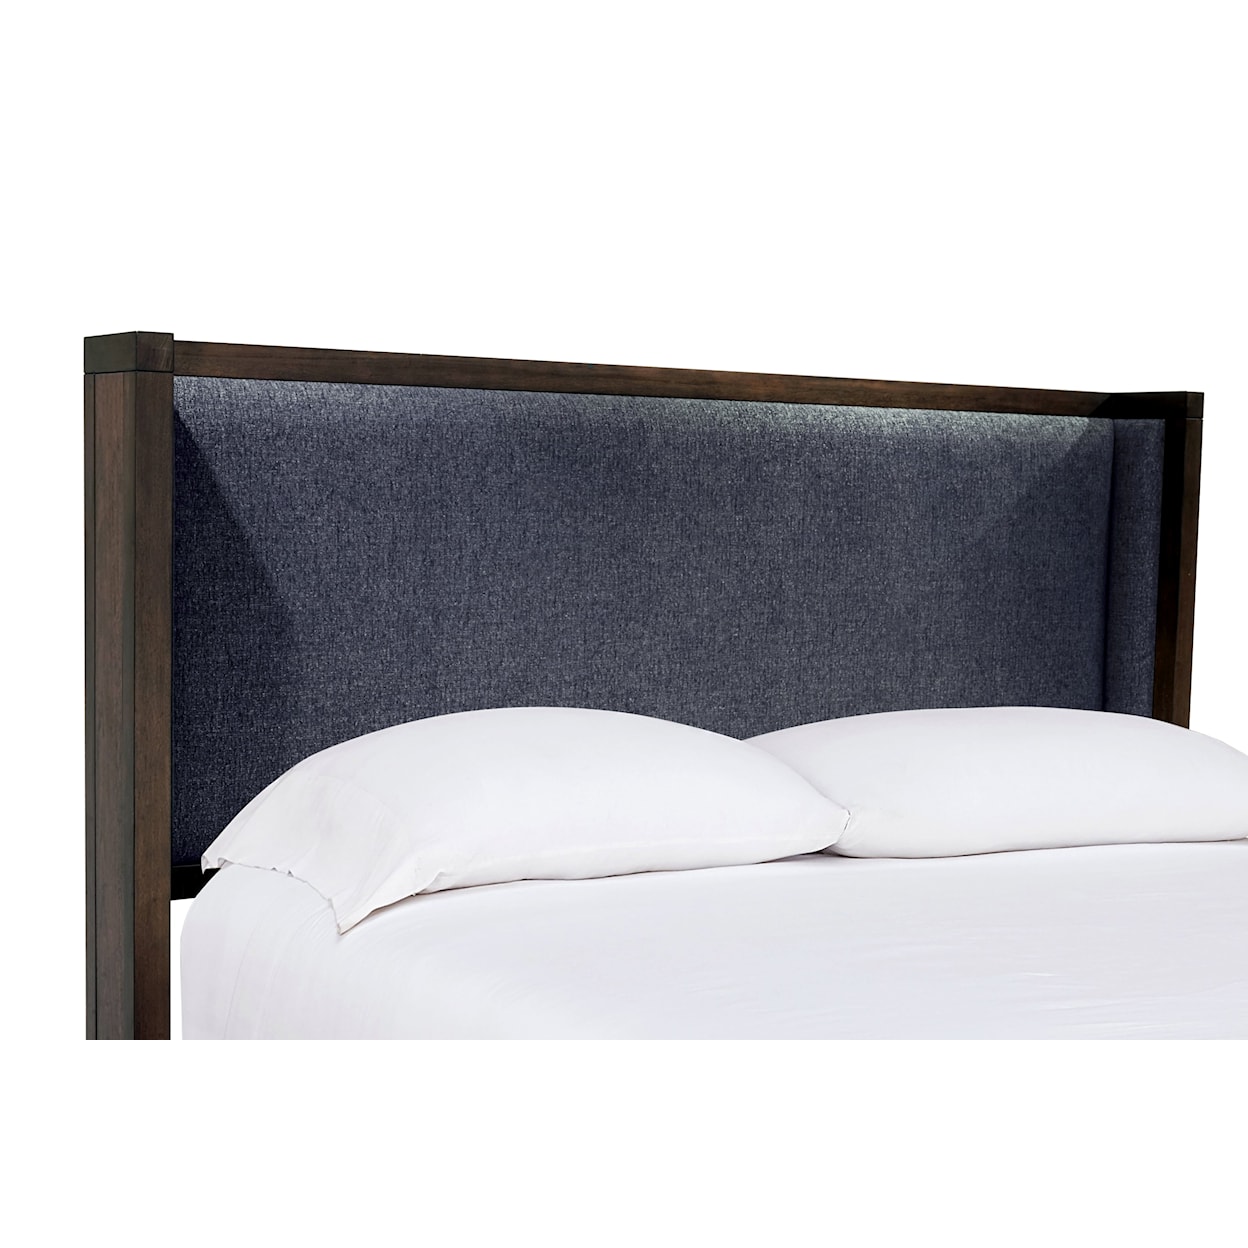 Modus International Boracay California King Upholstered Storage Bed